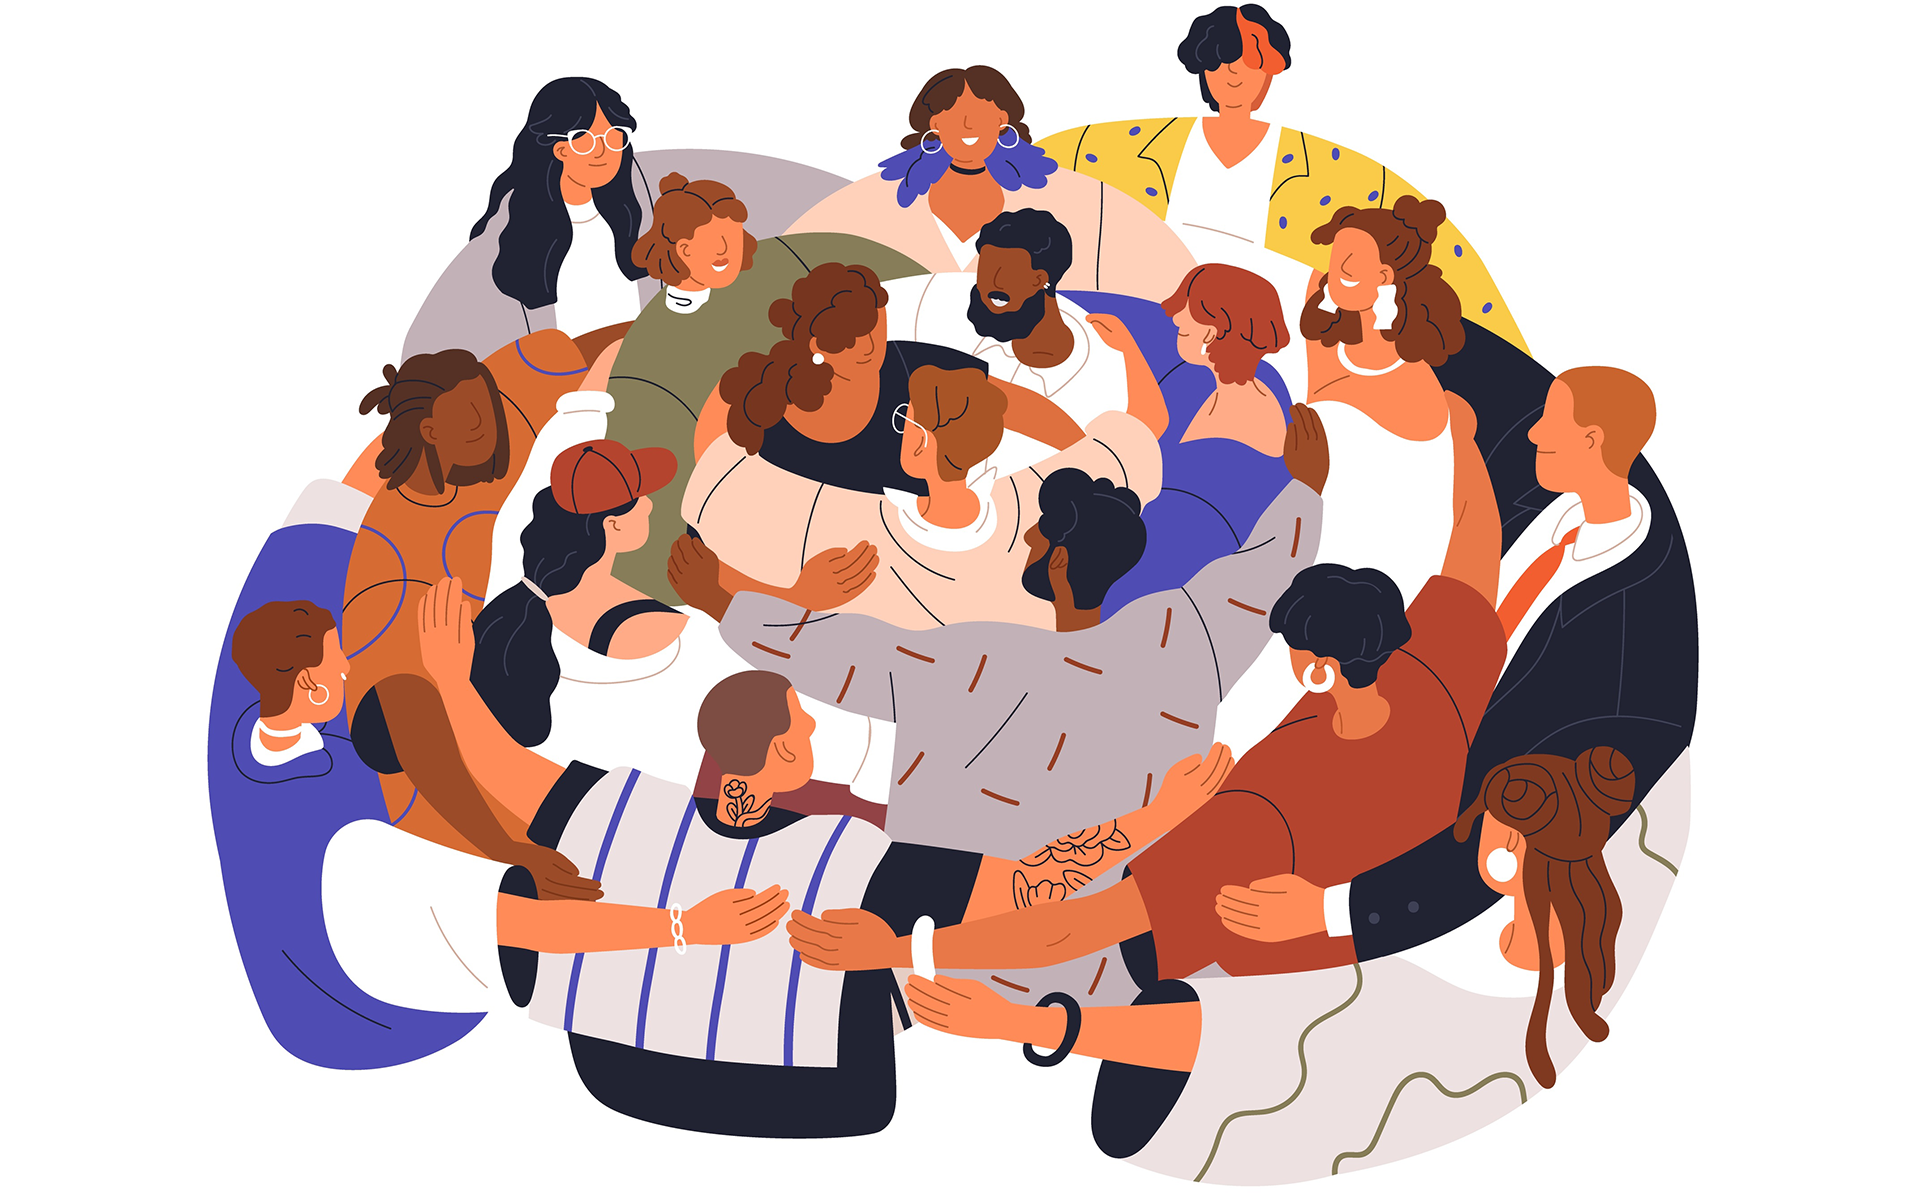 Illustration of Diverse people group in circle, hugging together.